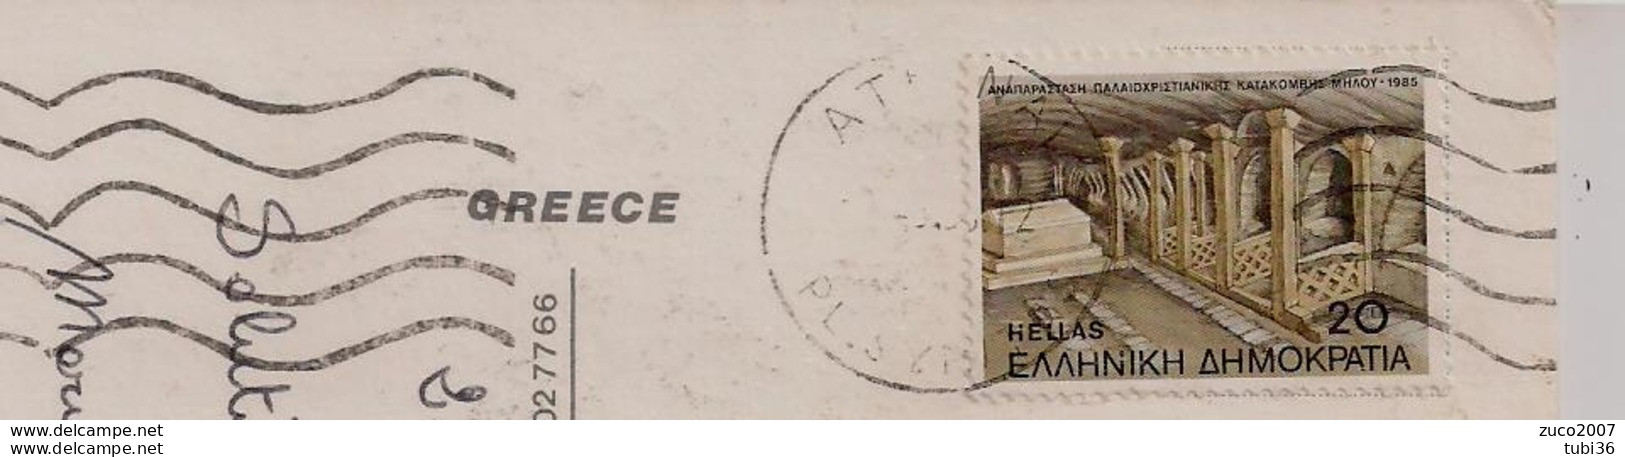 GRECIA - CATACOMBE 20 - 1985 - CARYATIDES - ITALIA - Storia Postale